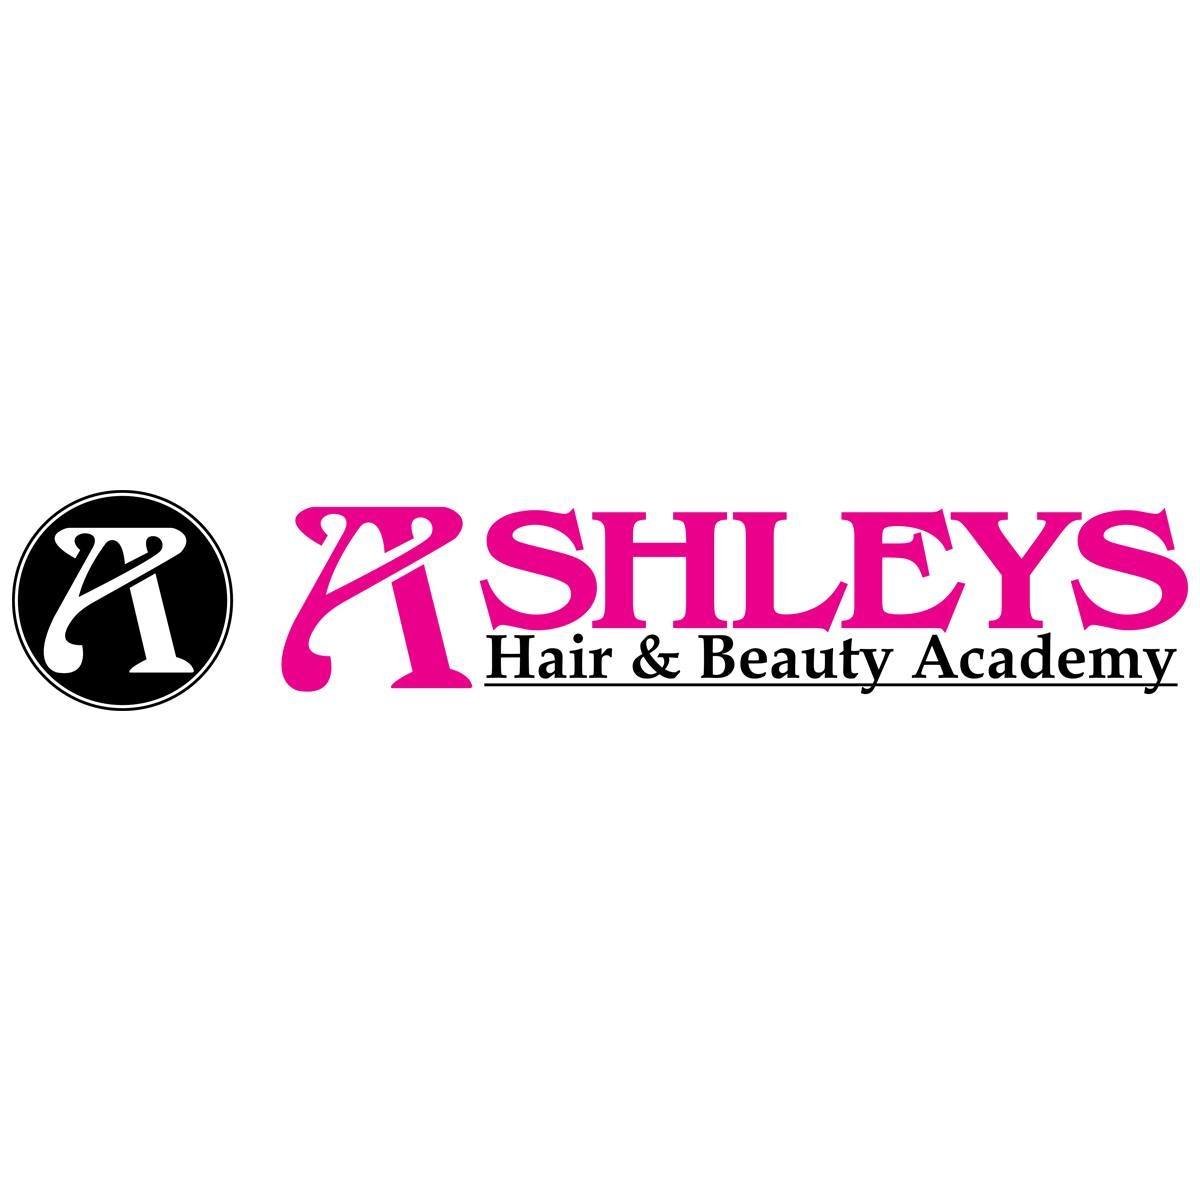 Ashleys Diploma in Fashion (Fashion Department)